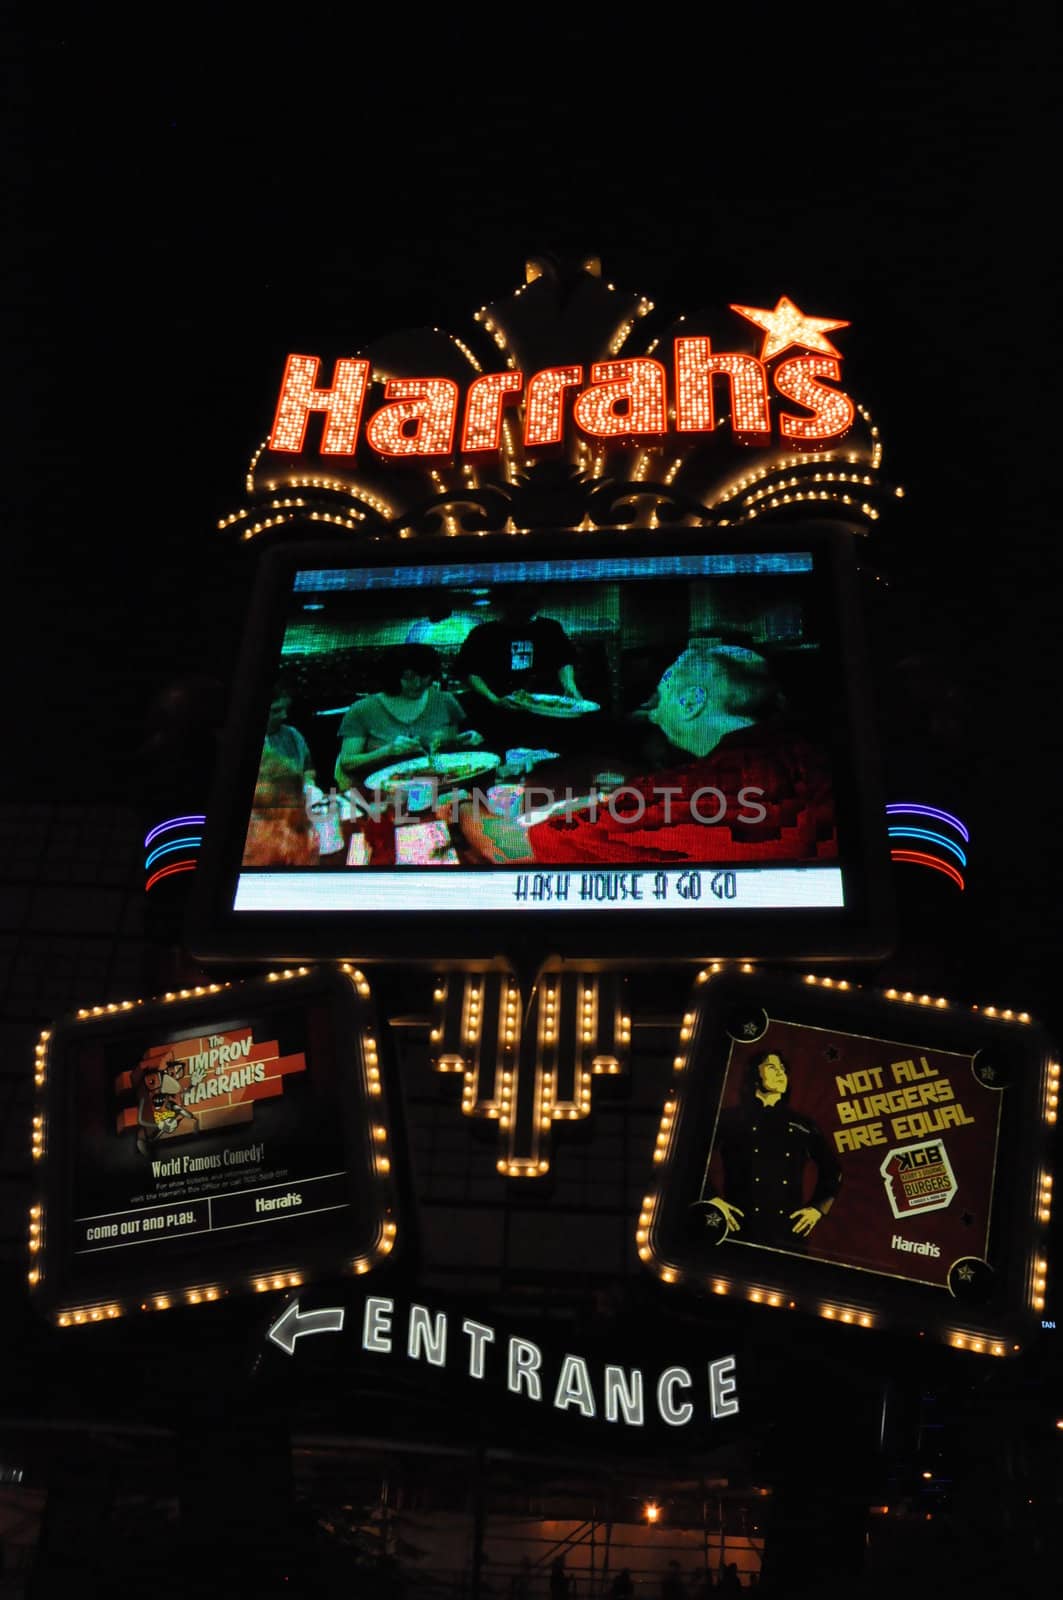 Harrah's Hotel and Casino in Las Vegas, Nevada